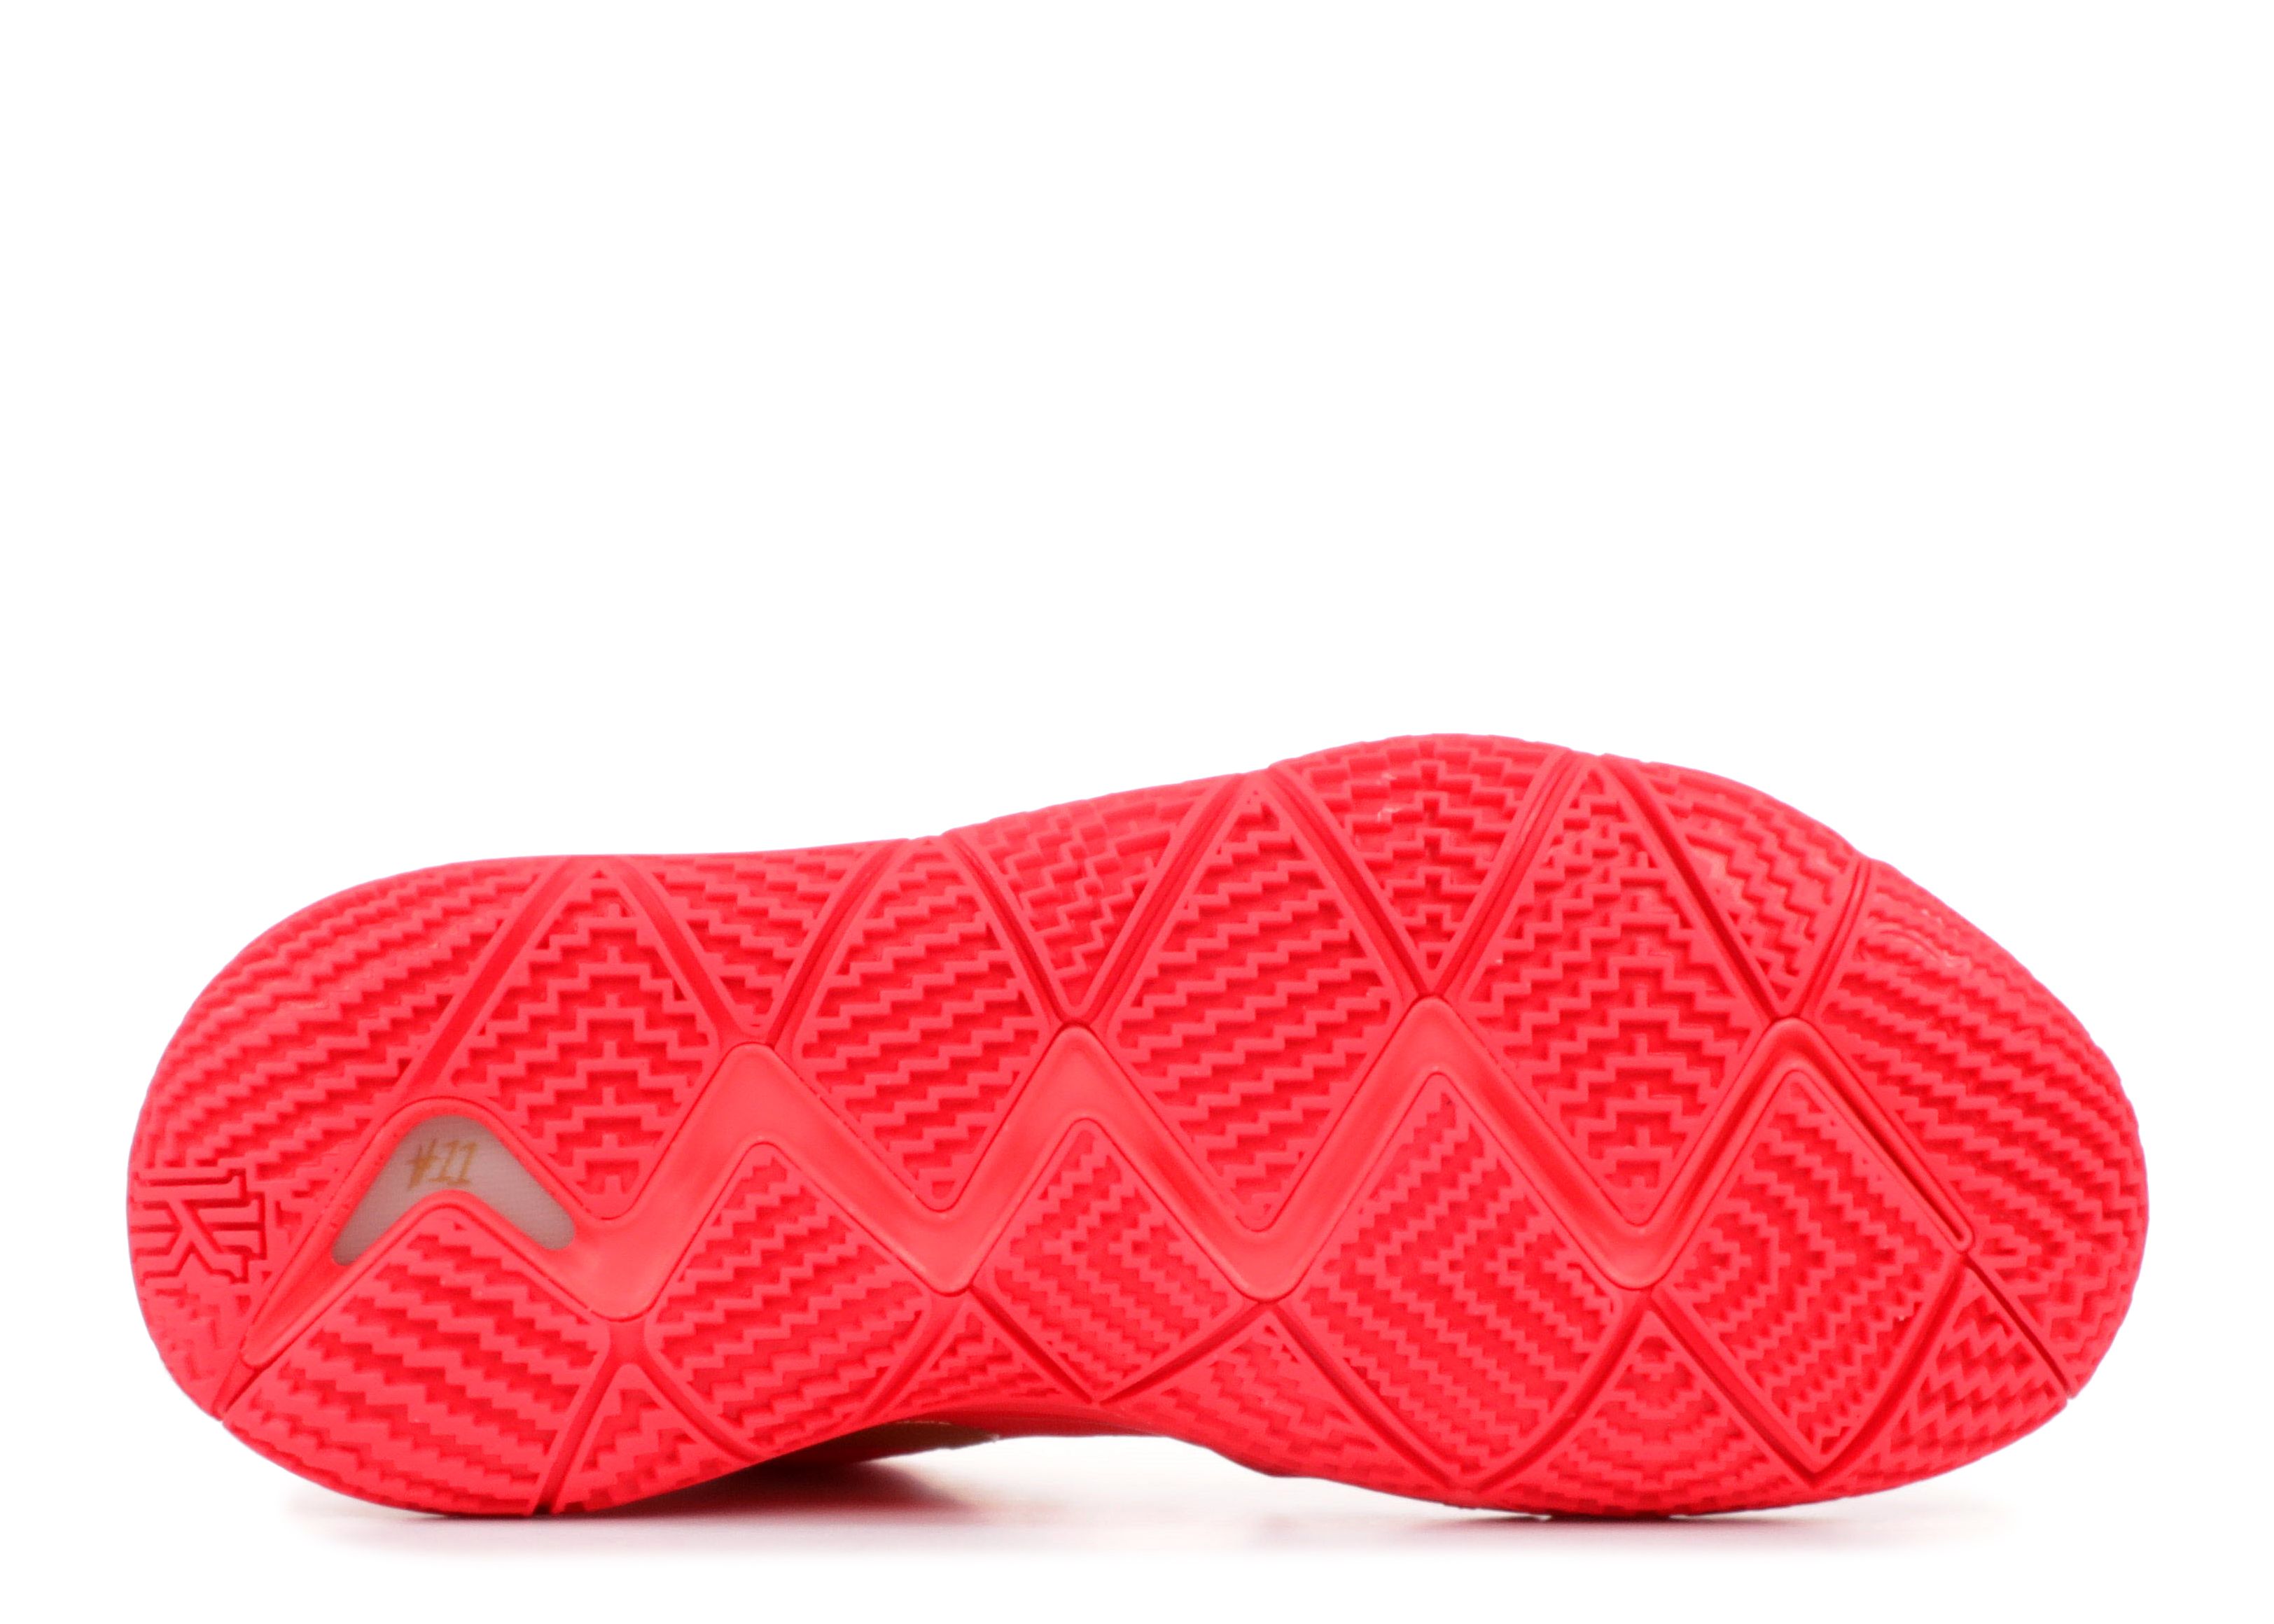 Kyrie 4 'Red Carpet' - Nike - 943806 